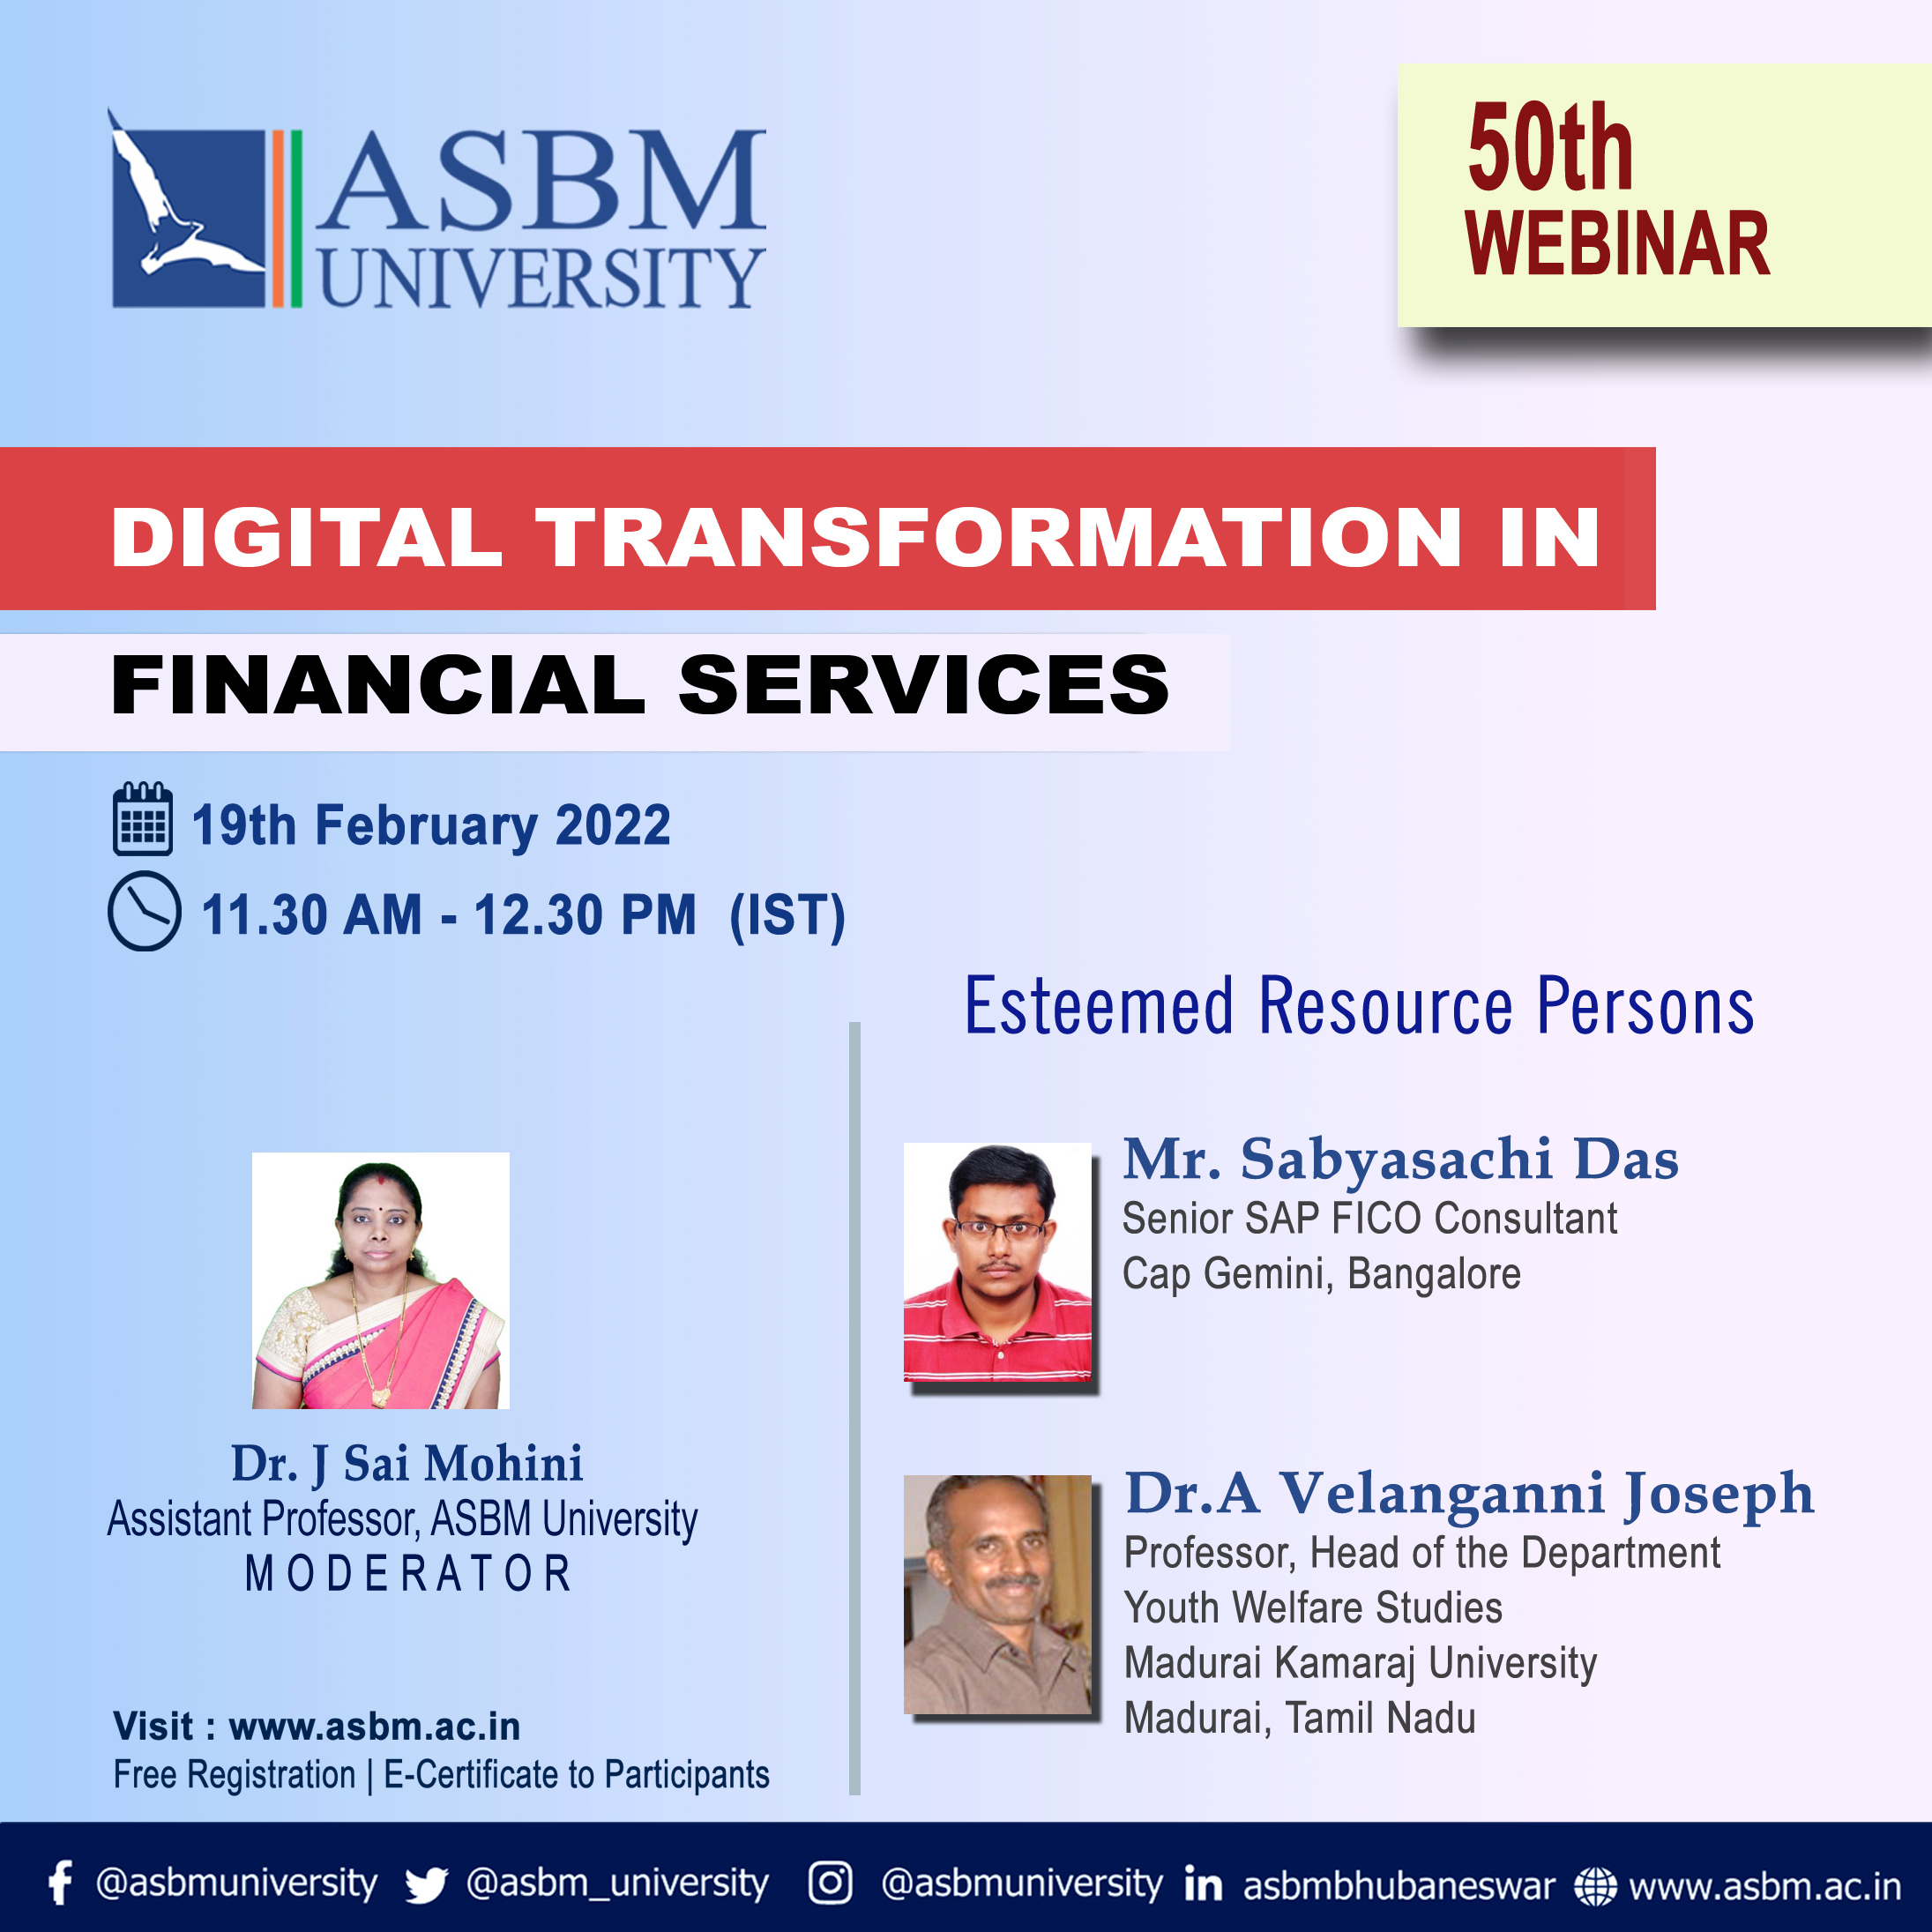 50th Webinar on “Digital Transformation in Financial Services”